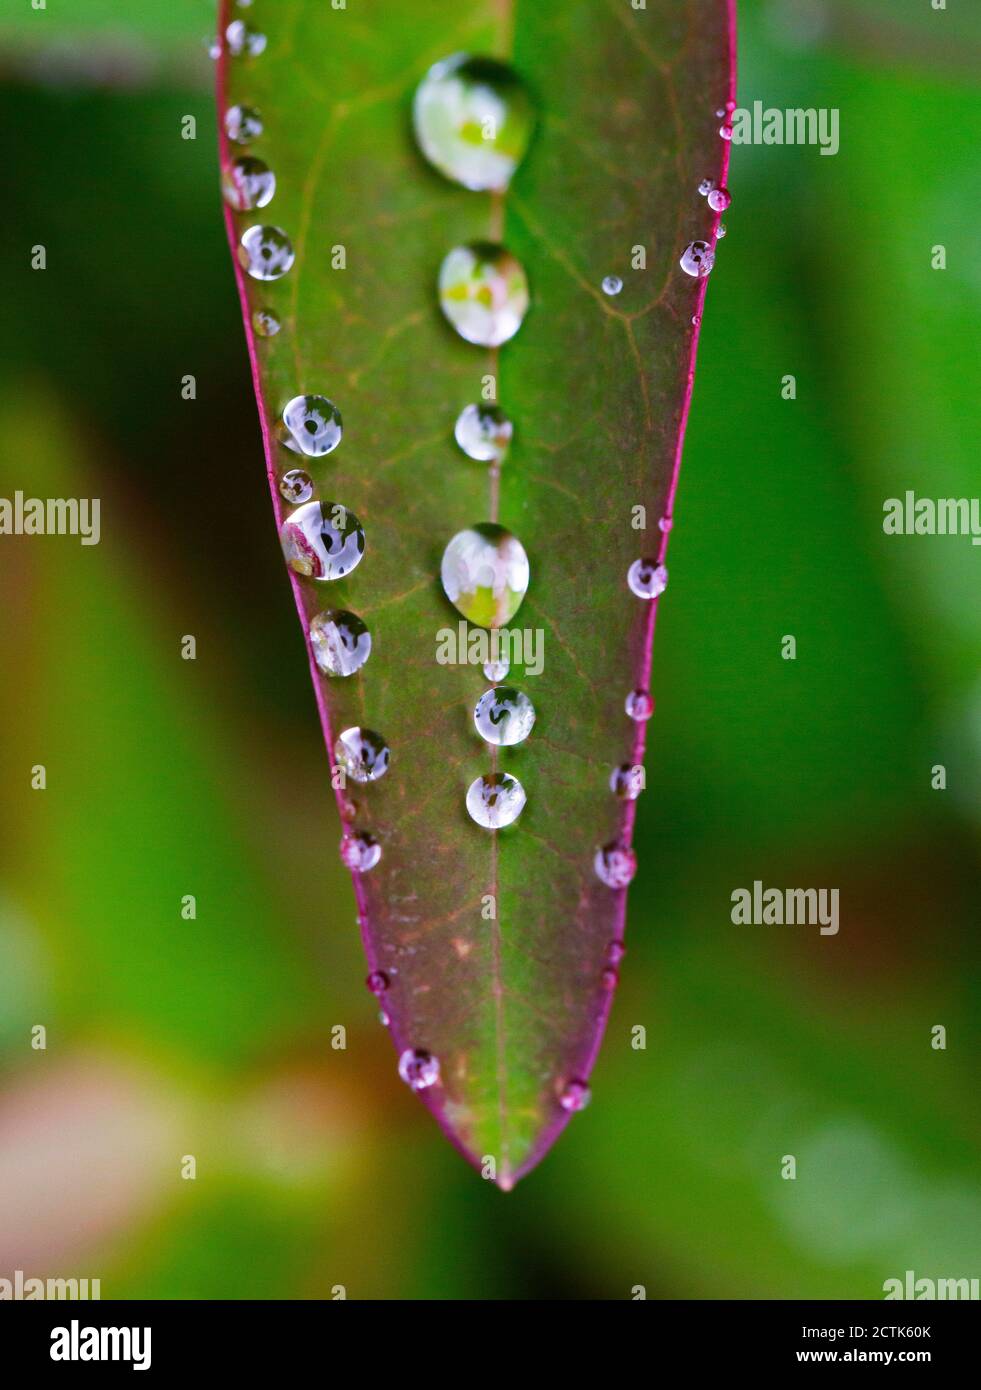 Raindrops on green leaf of Saint Johns wort (Hypericum perforatum) Stock Photo